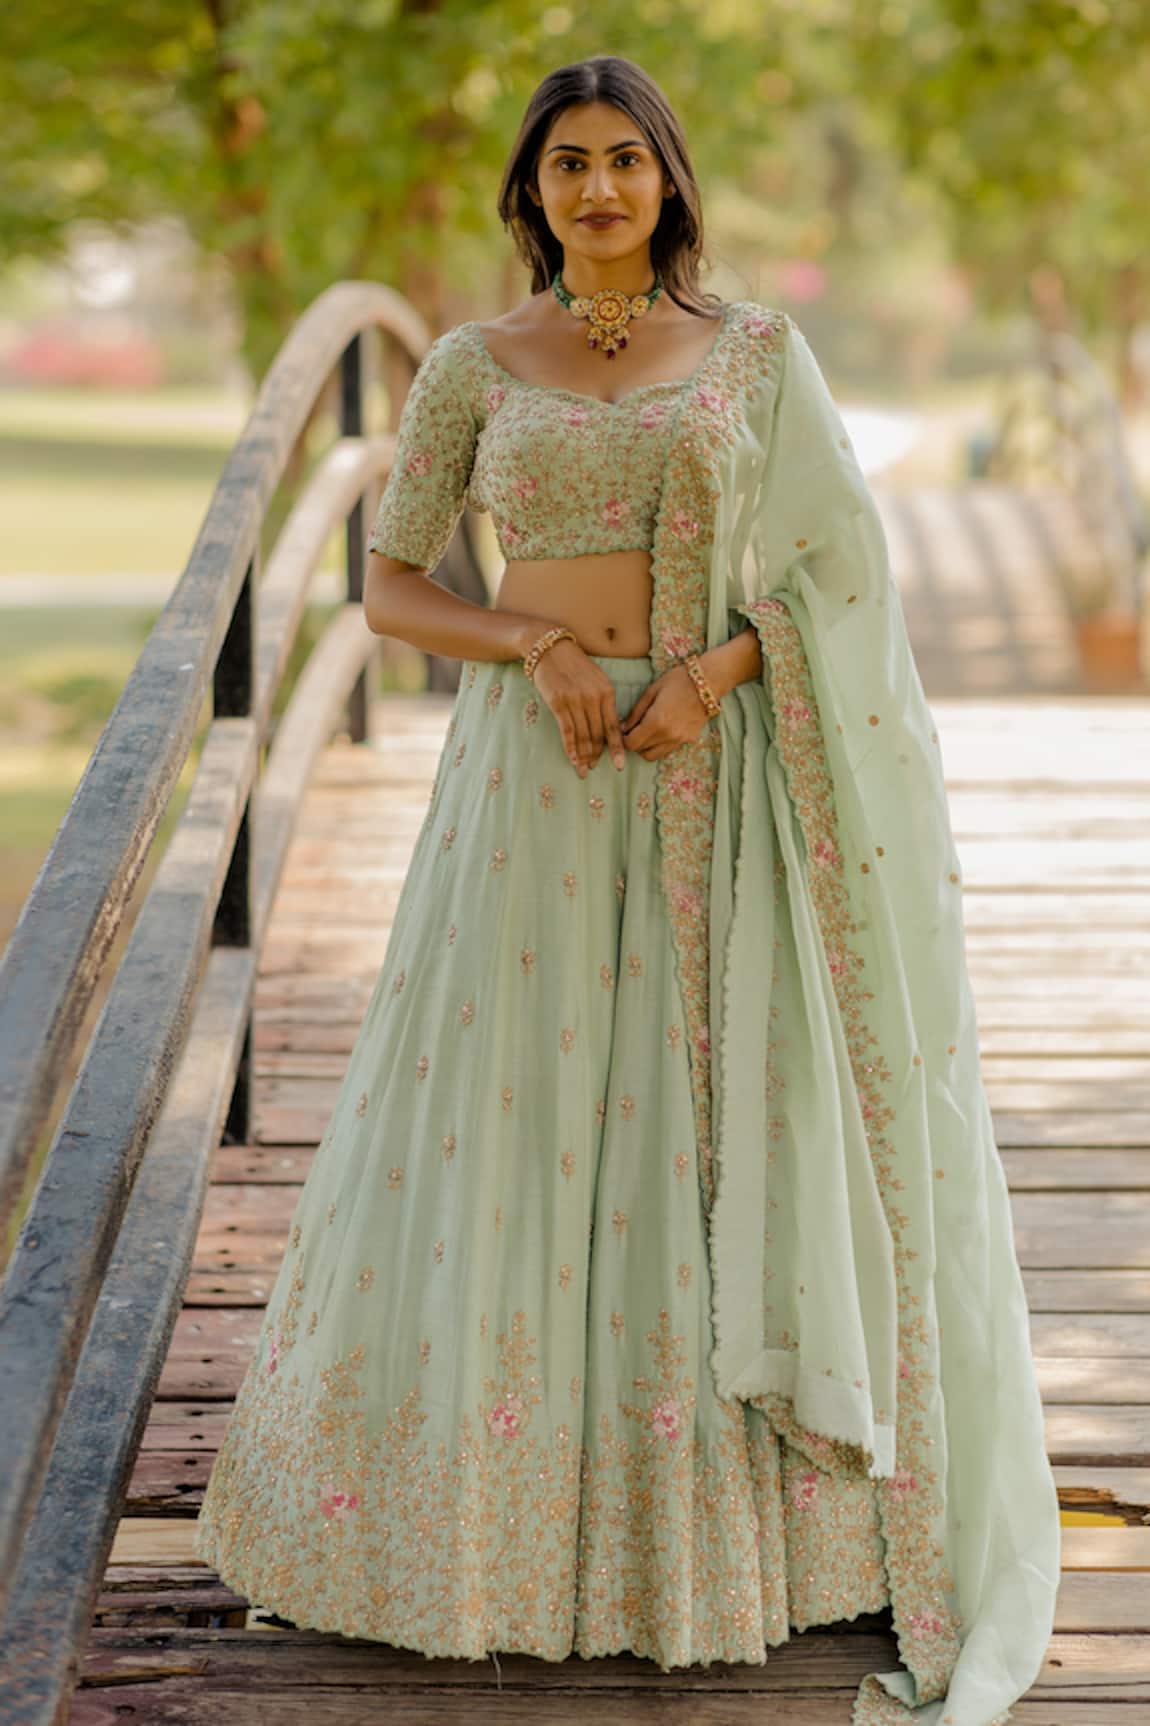 Anupraas by Nishant and Rahul Floral Embellished Bridal Lehenga Set